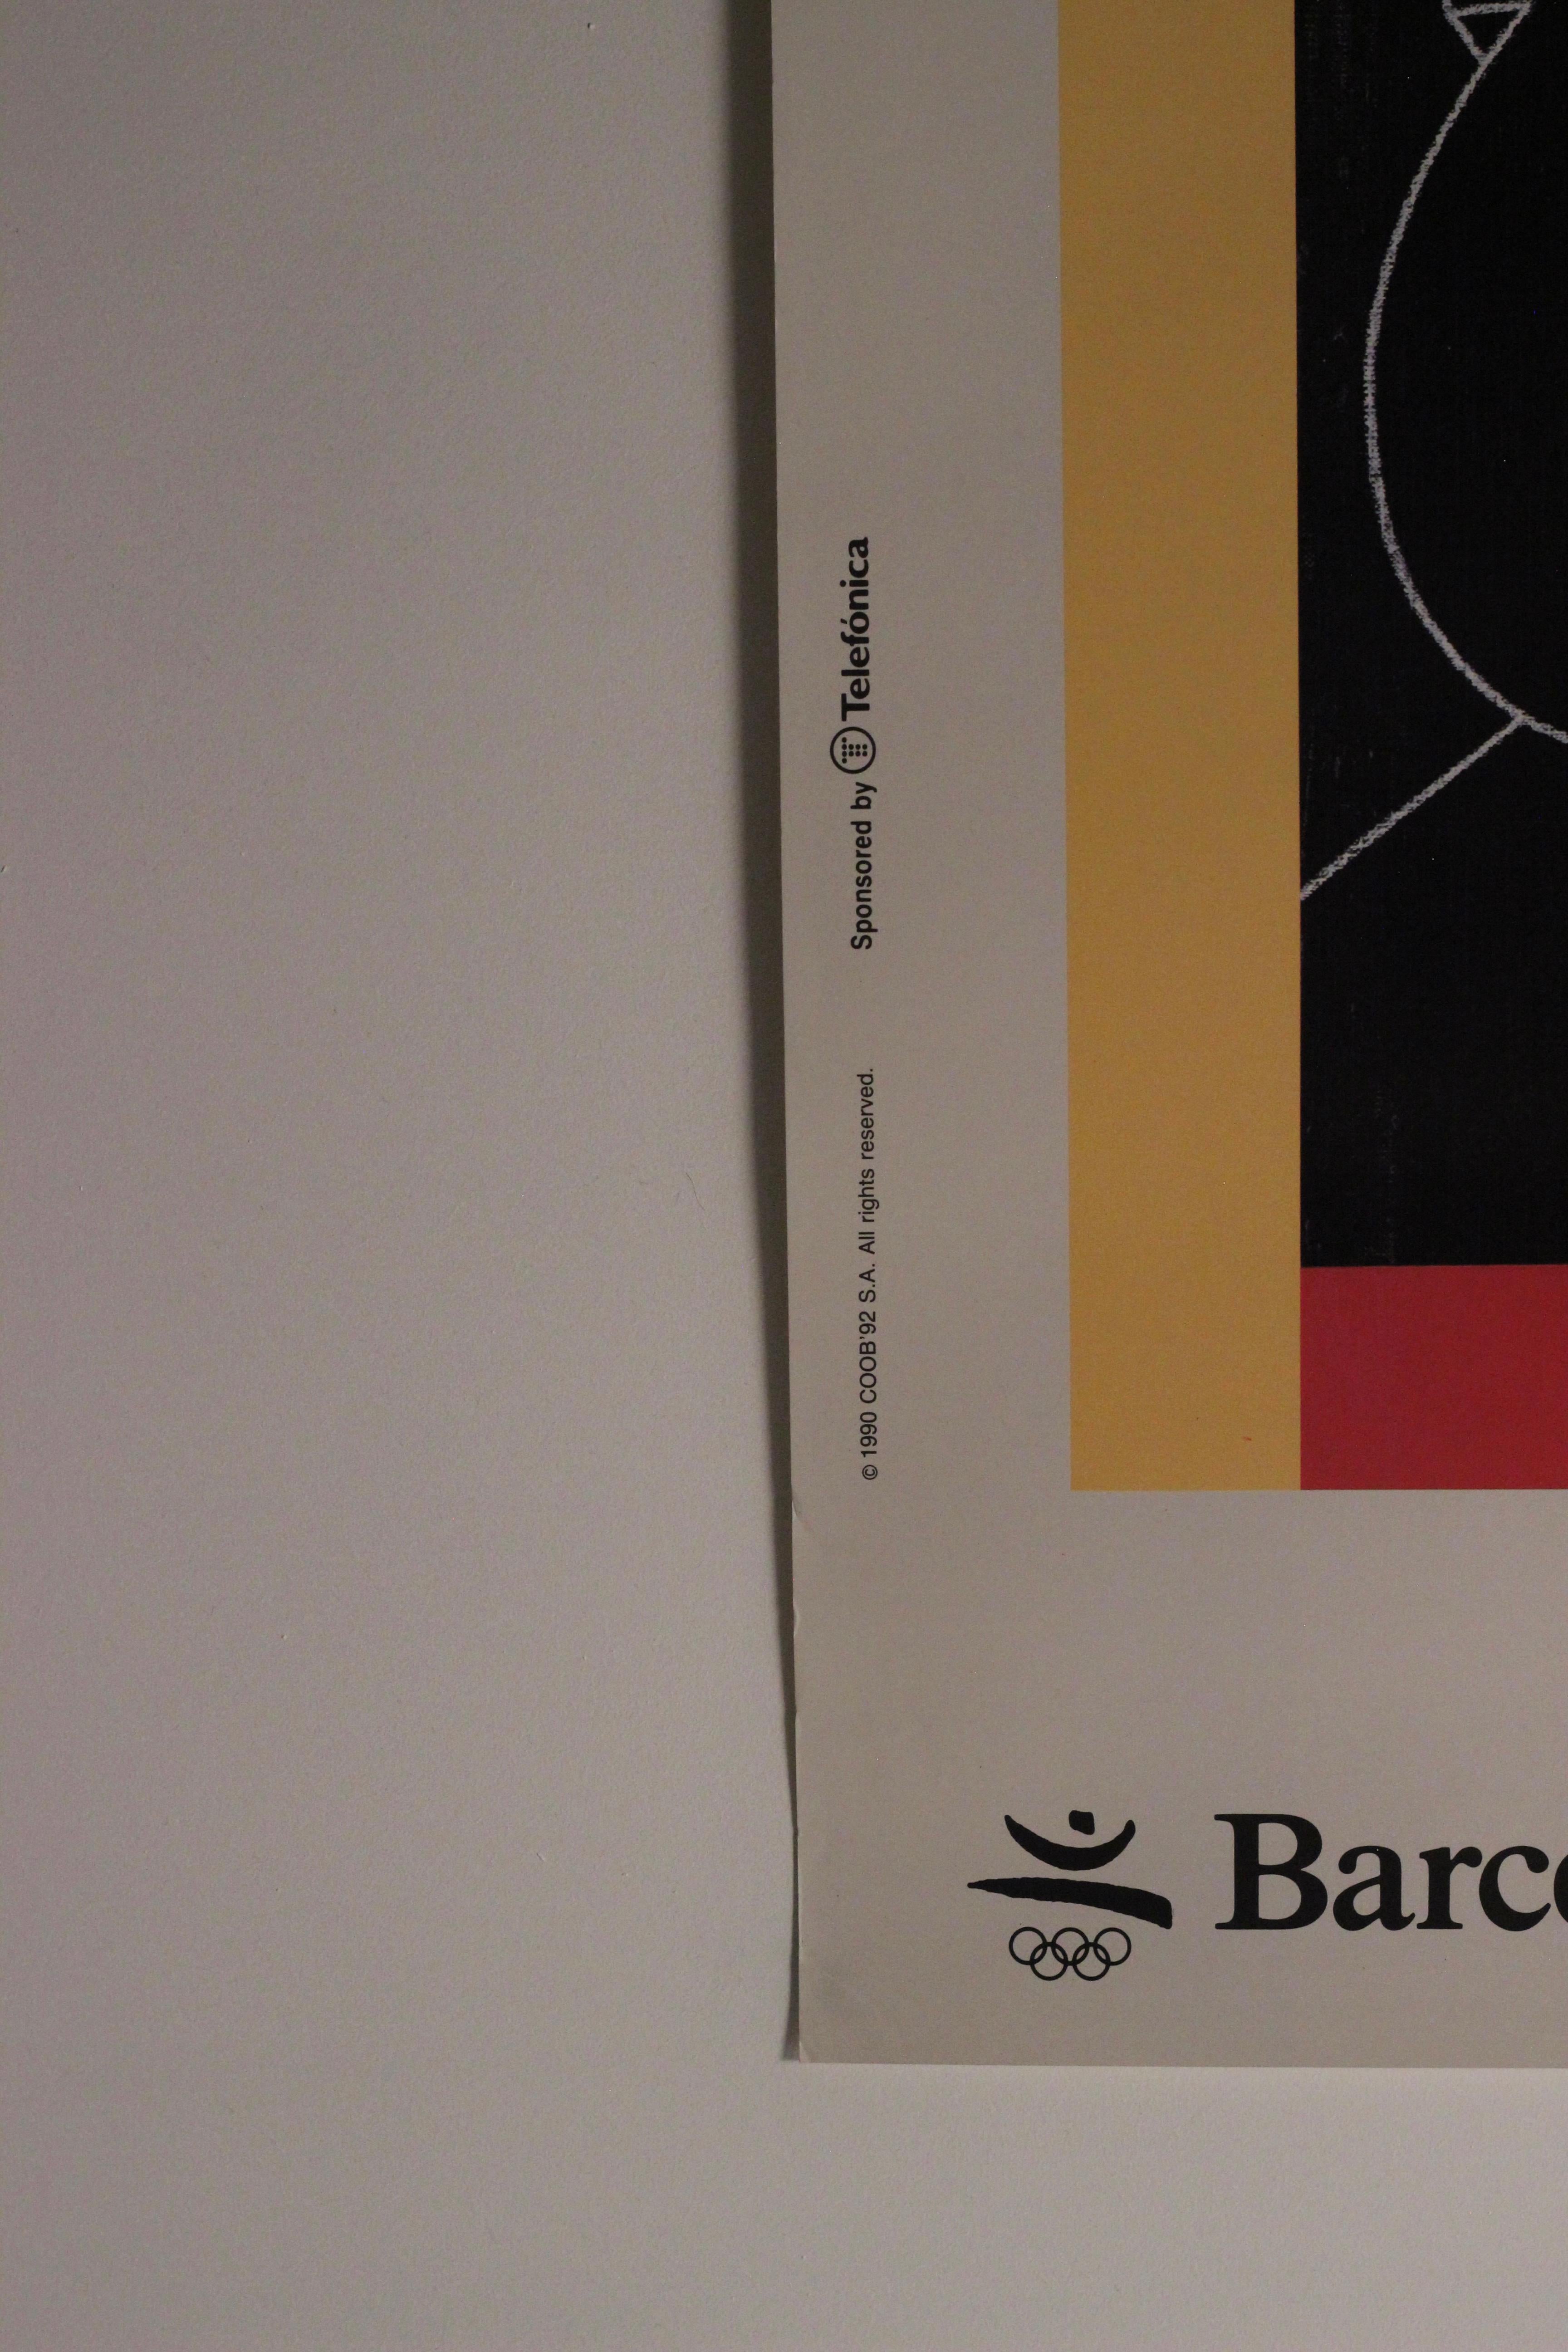 Spanish Original Barcelona Olympic Poster 1992 by Eduardo Arroyo For Sale